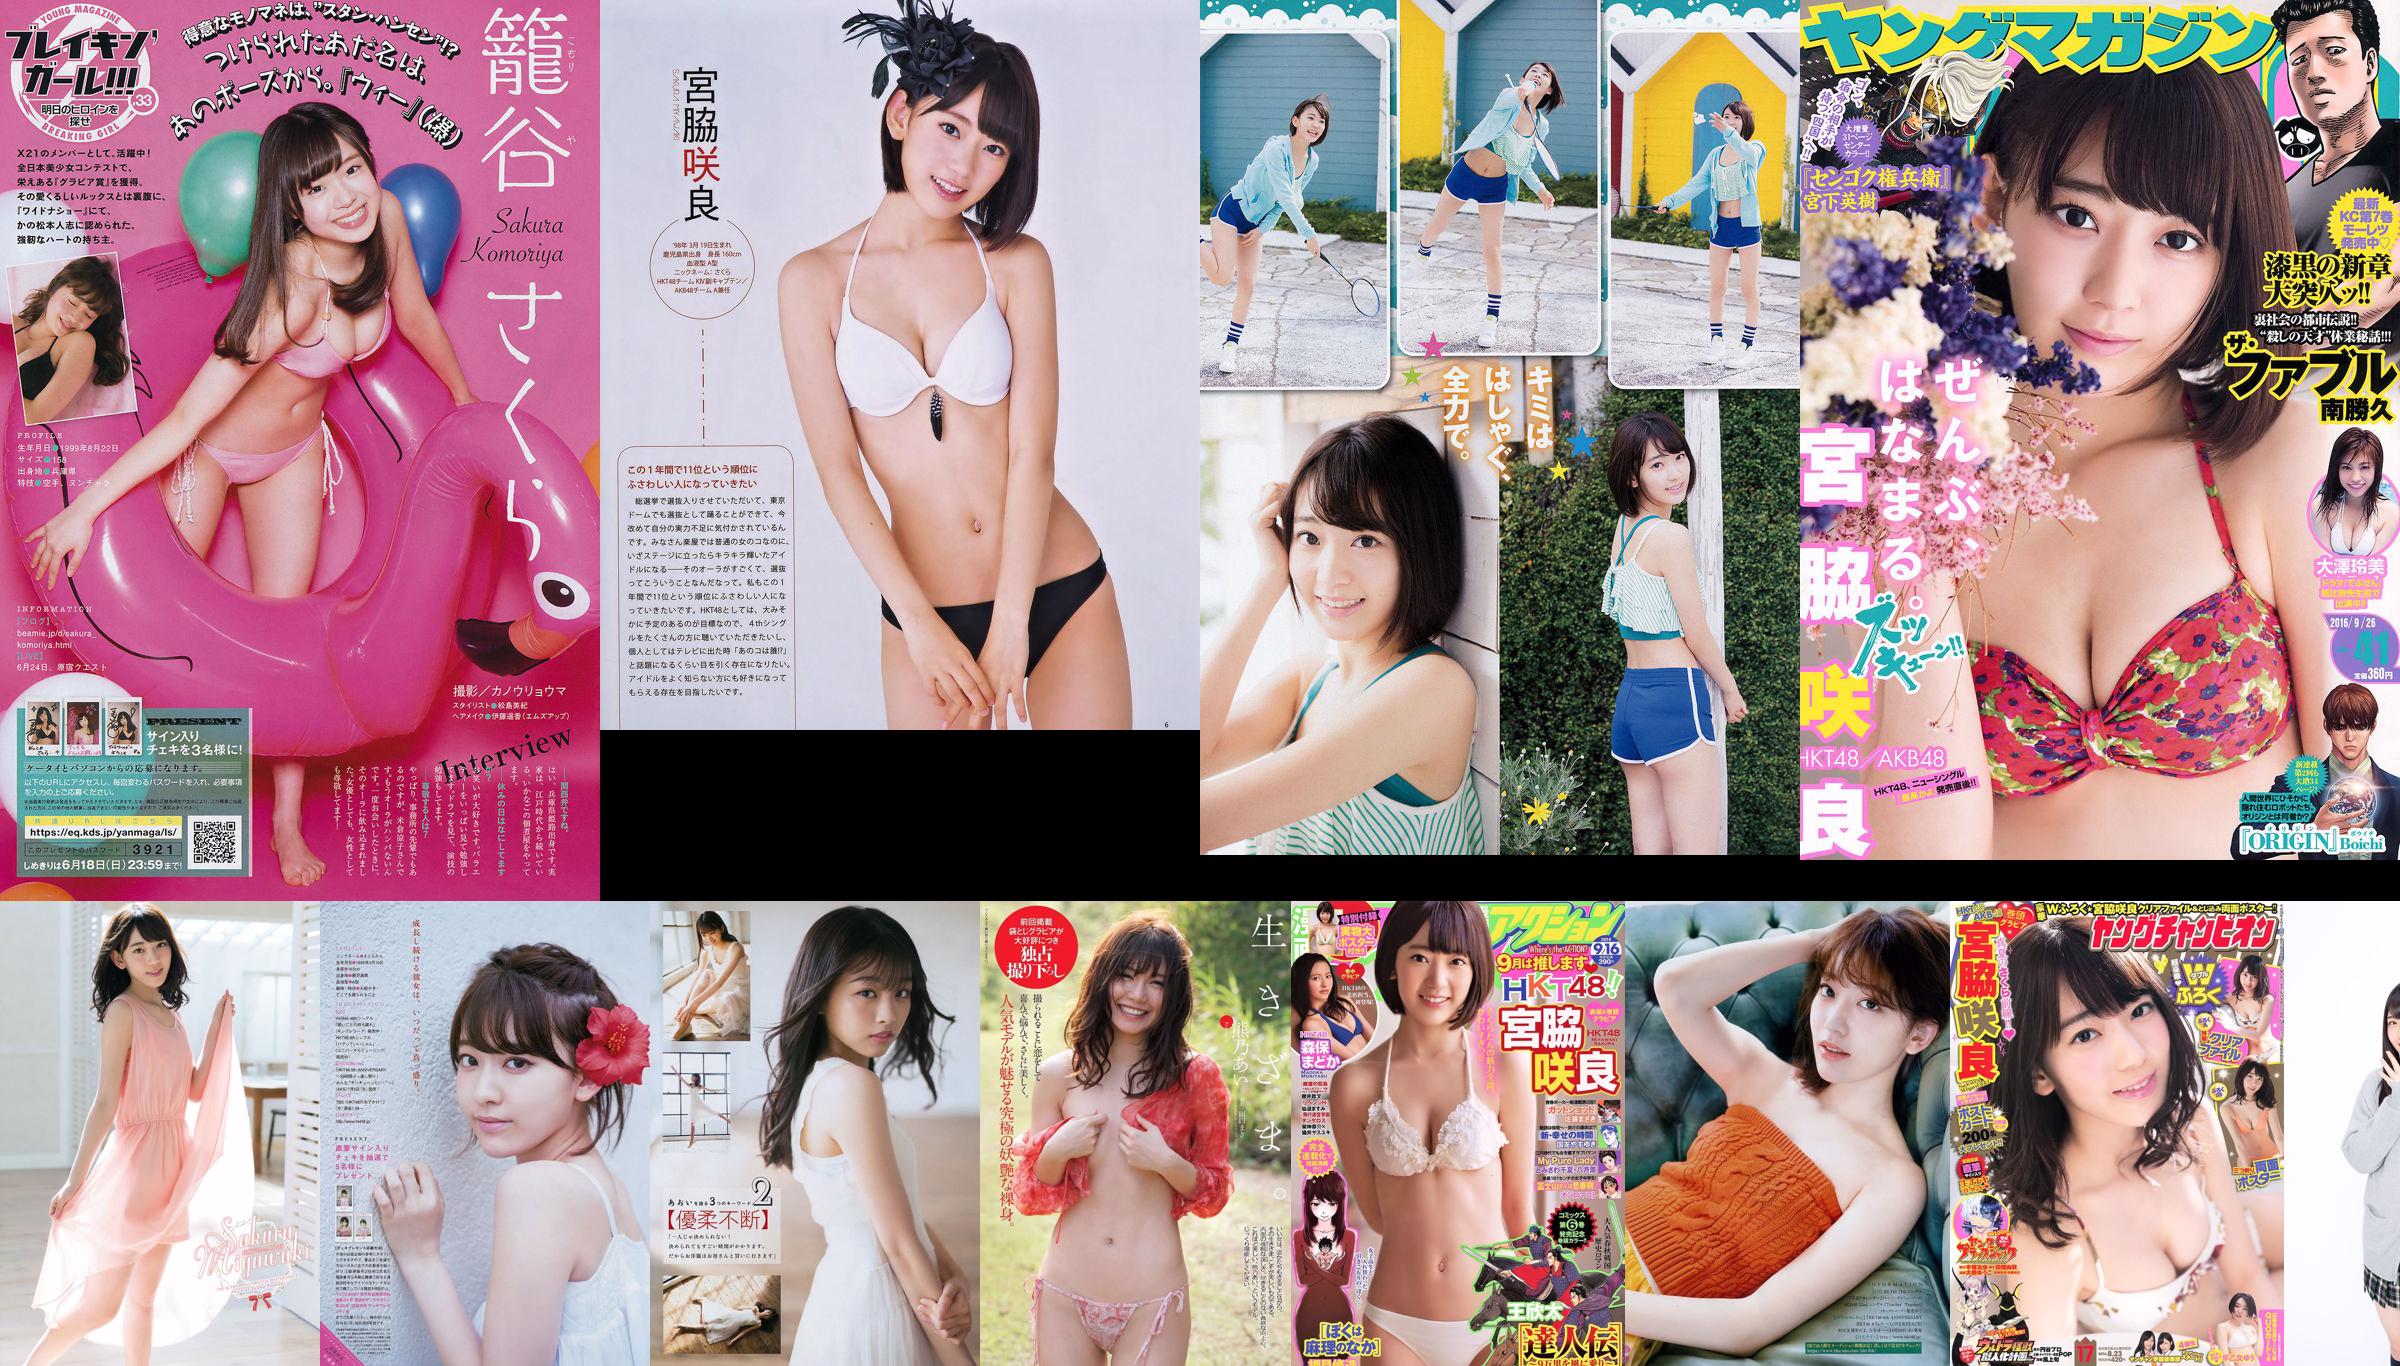 [Manga Action] Miyawaki Sakura 2014 N°18 Photo Magazine No.ae180b Page 1